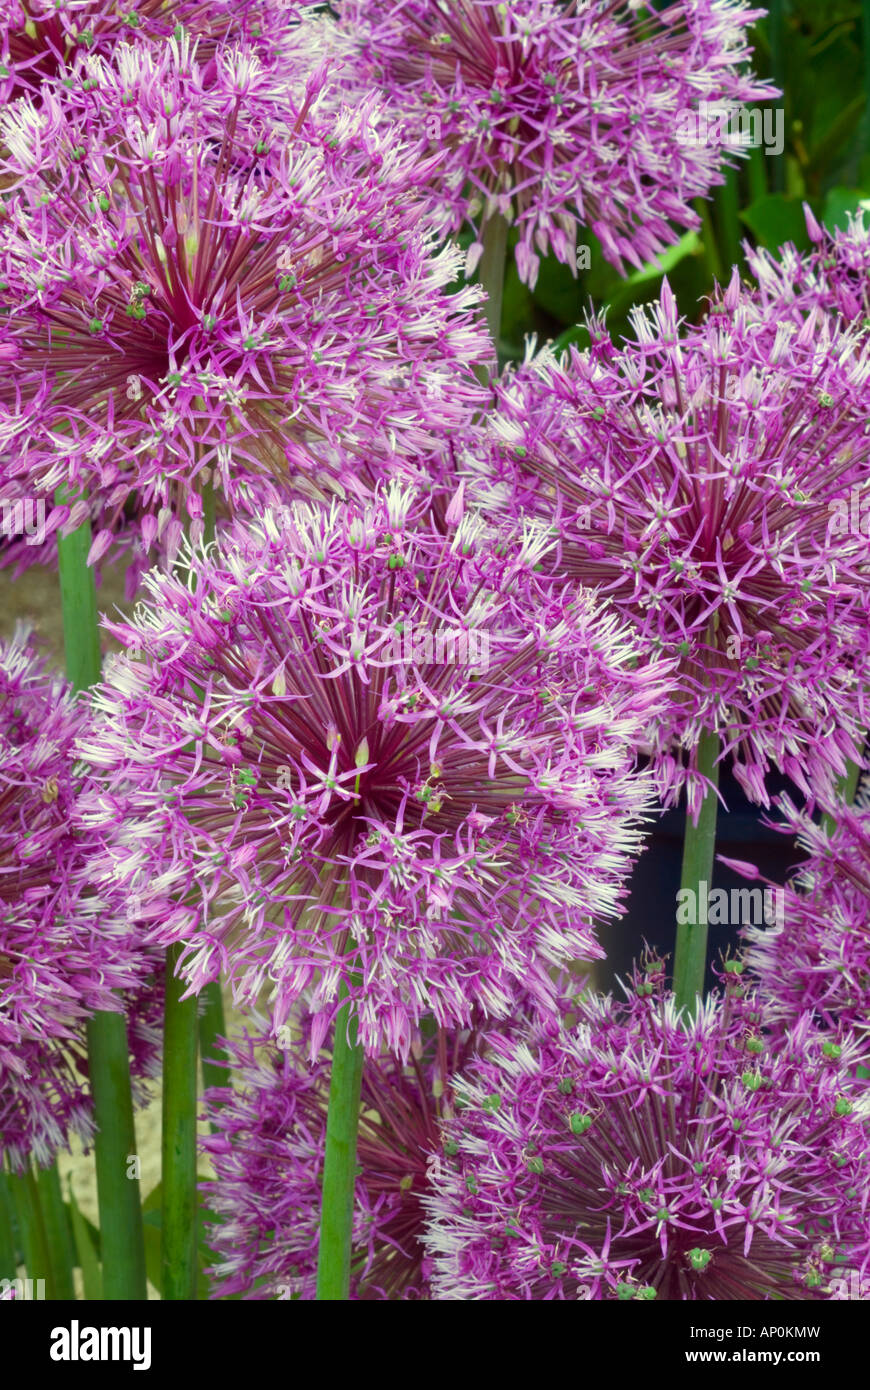 Allium 'Early Emperor' ornamental onion bulbs, flowering garlic blooming in purple lavender violet spiky flowers in May spring Stock Photo